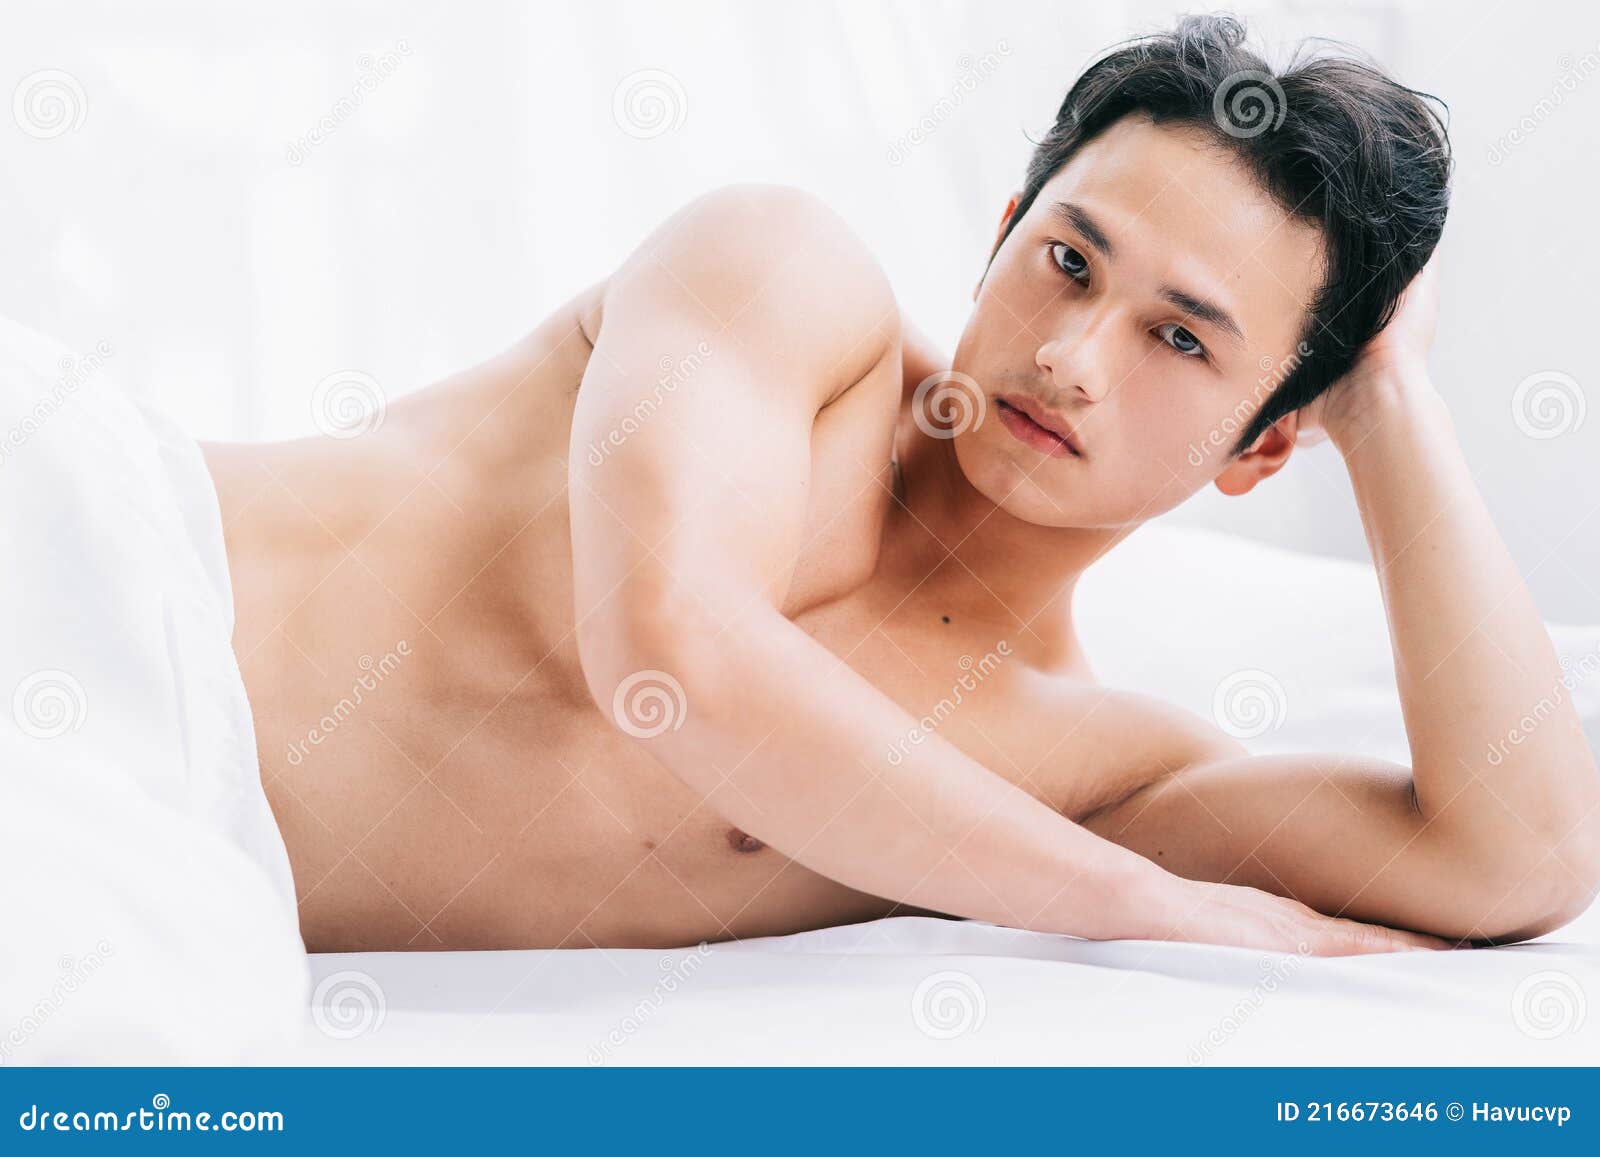 голый мужчина лежит картинка